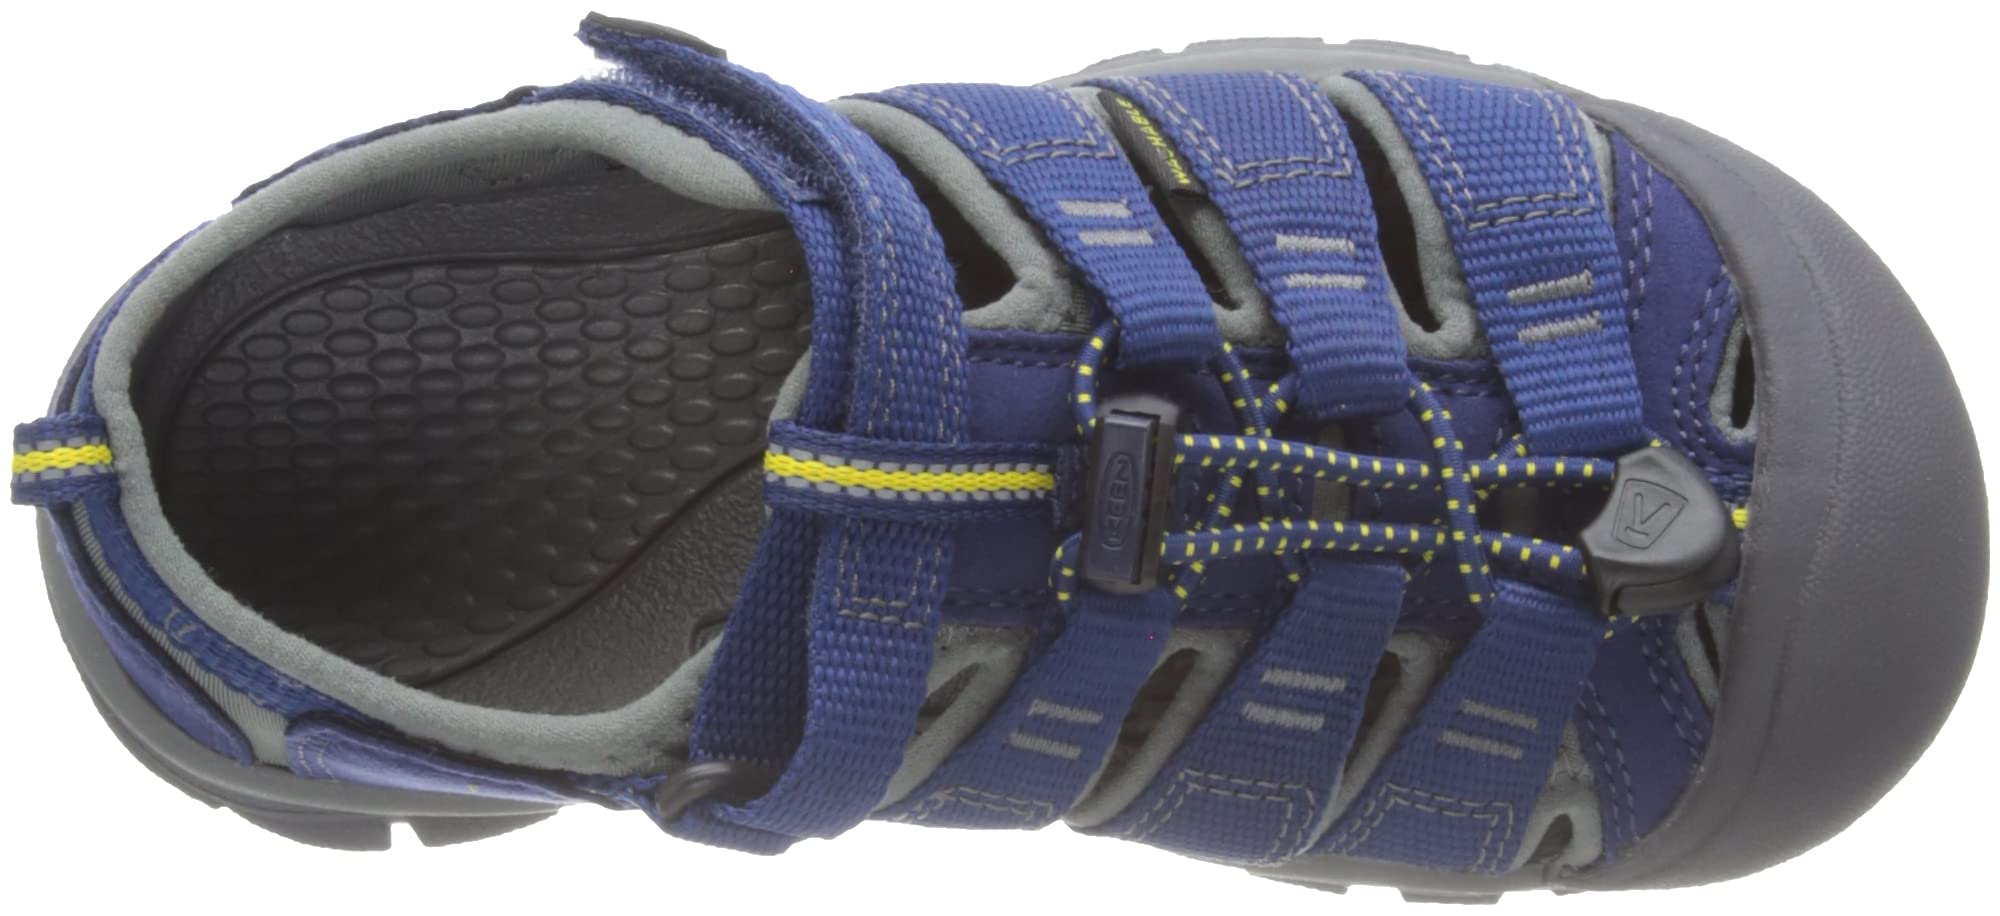 KEEN Unisex-Child Newport H2 Closed Toe Water Sandals, Blue Depths/Gargoyle, 7 Toddler US